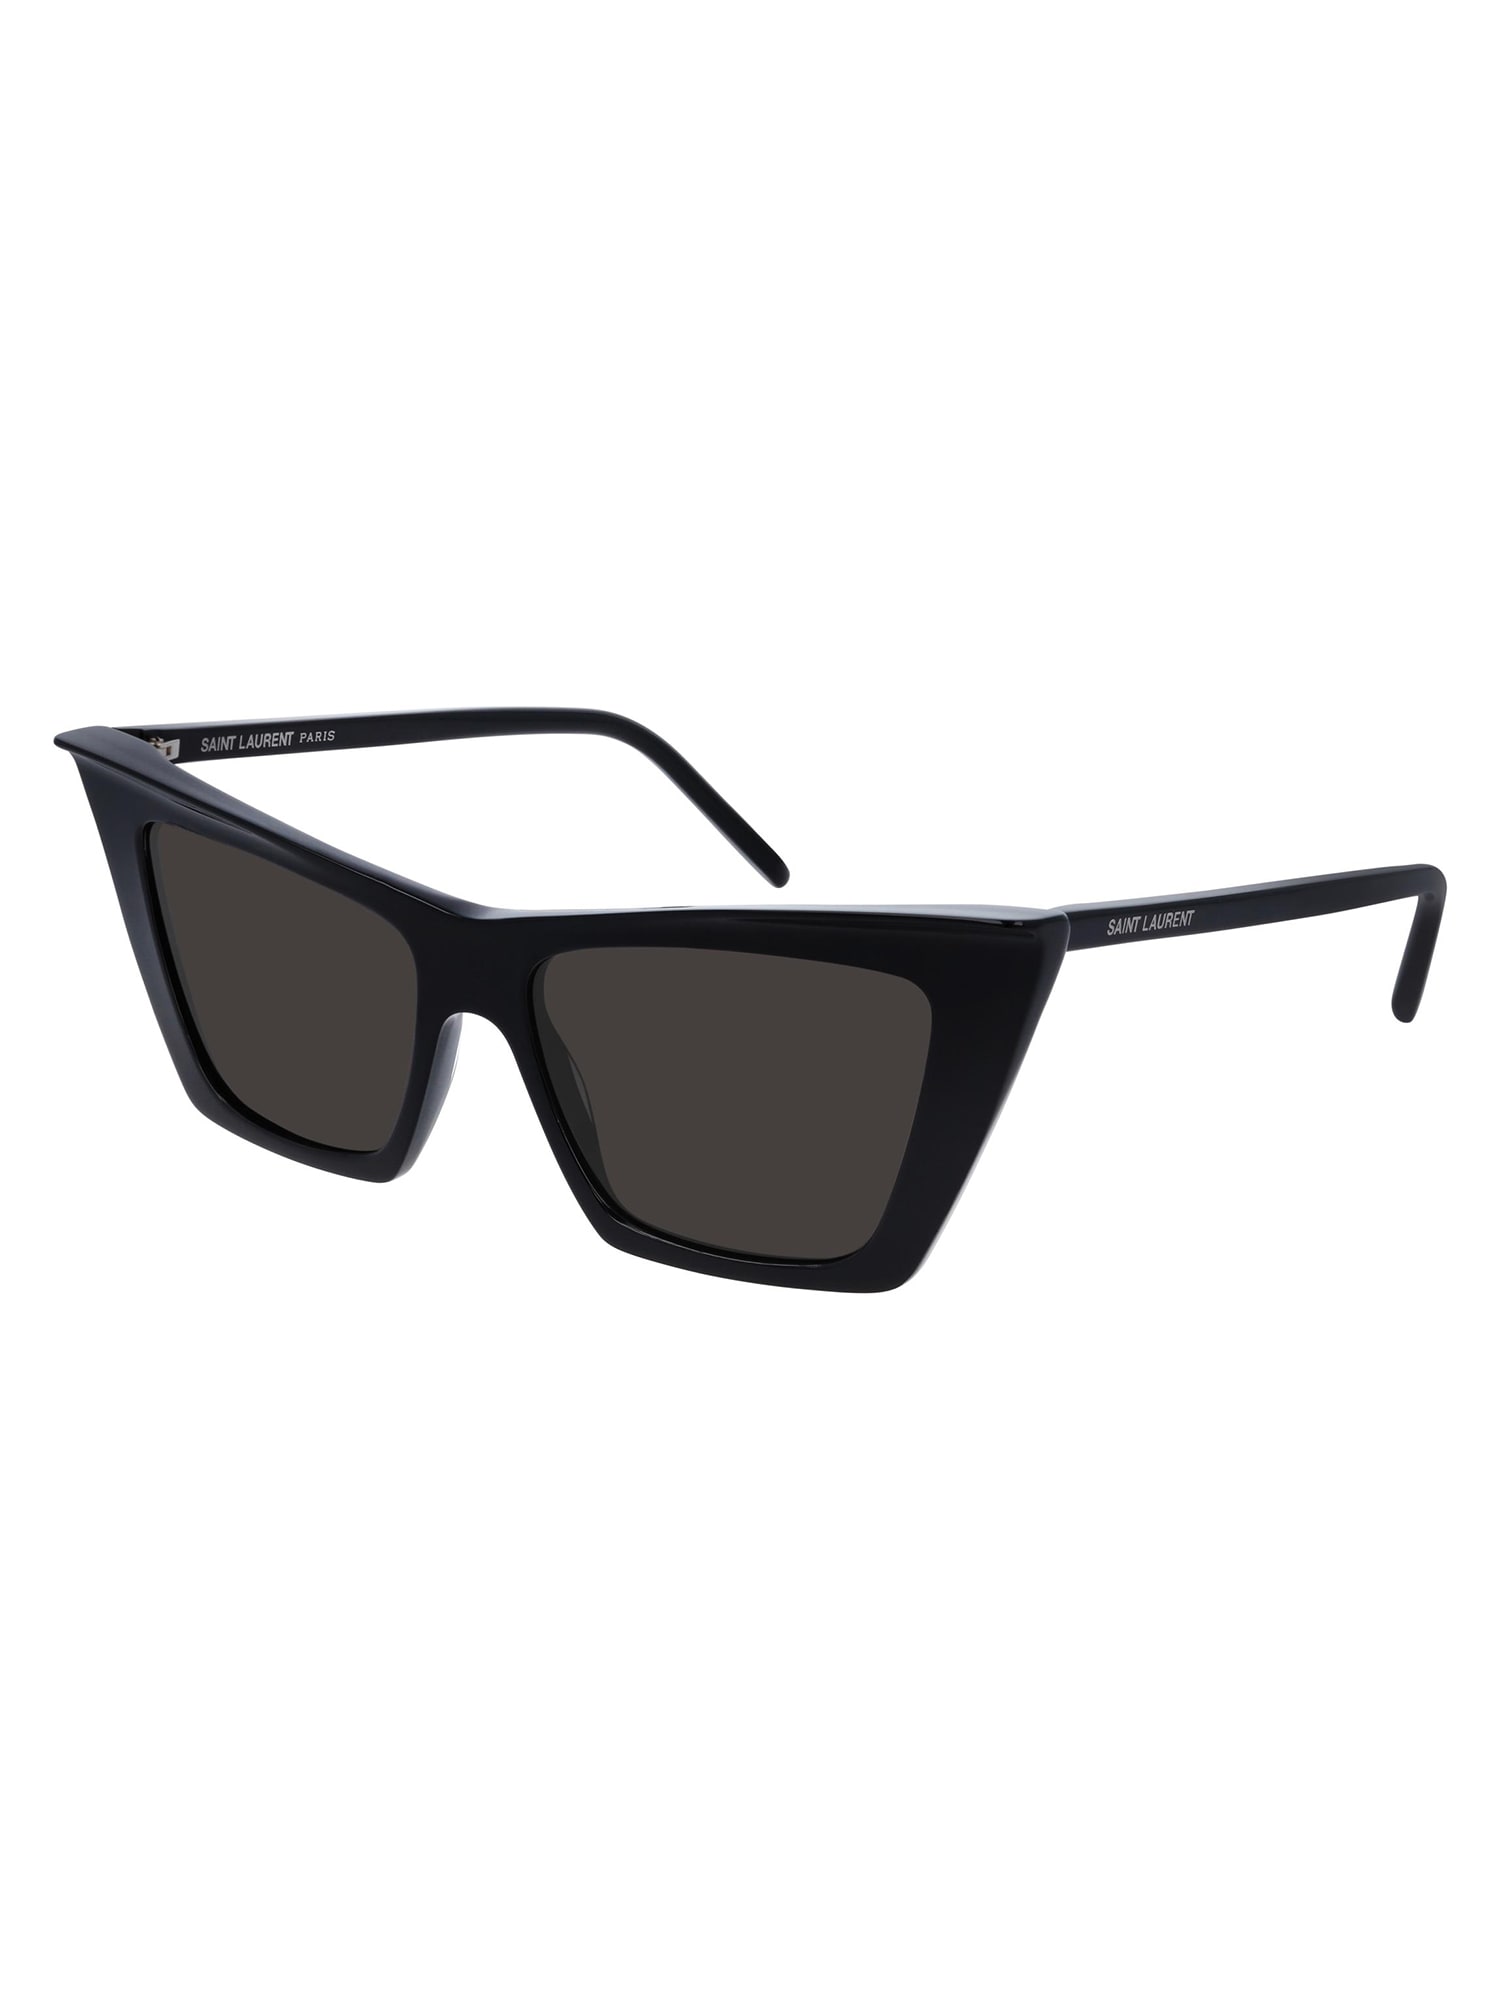 Saint Laurent Sl 372 Sunglasses In Black Black Black